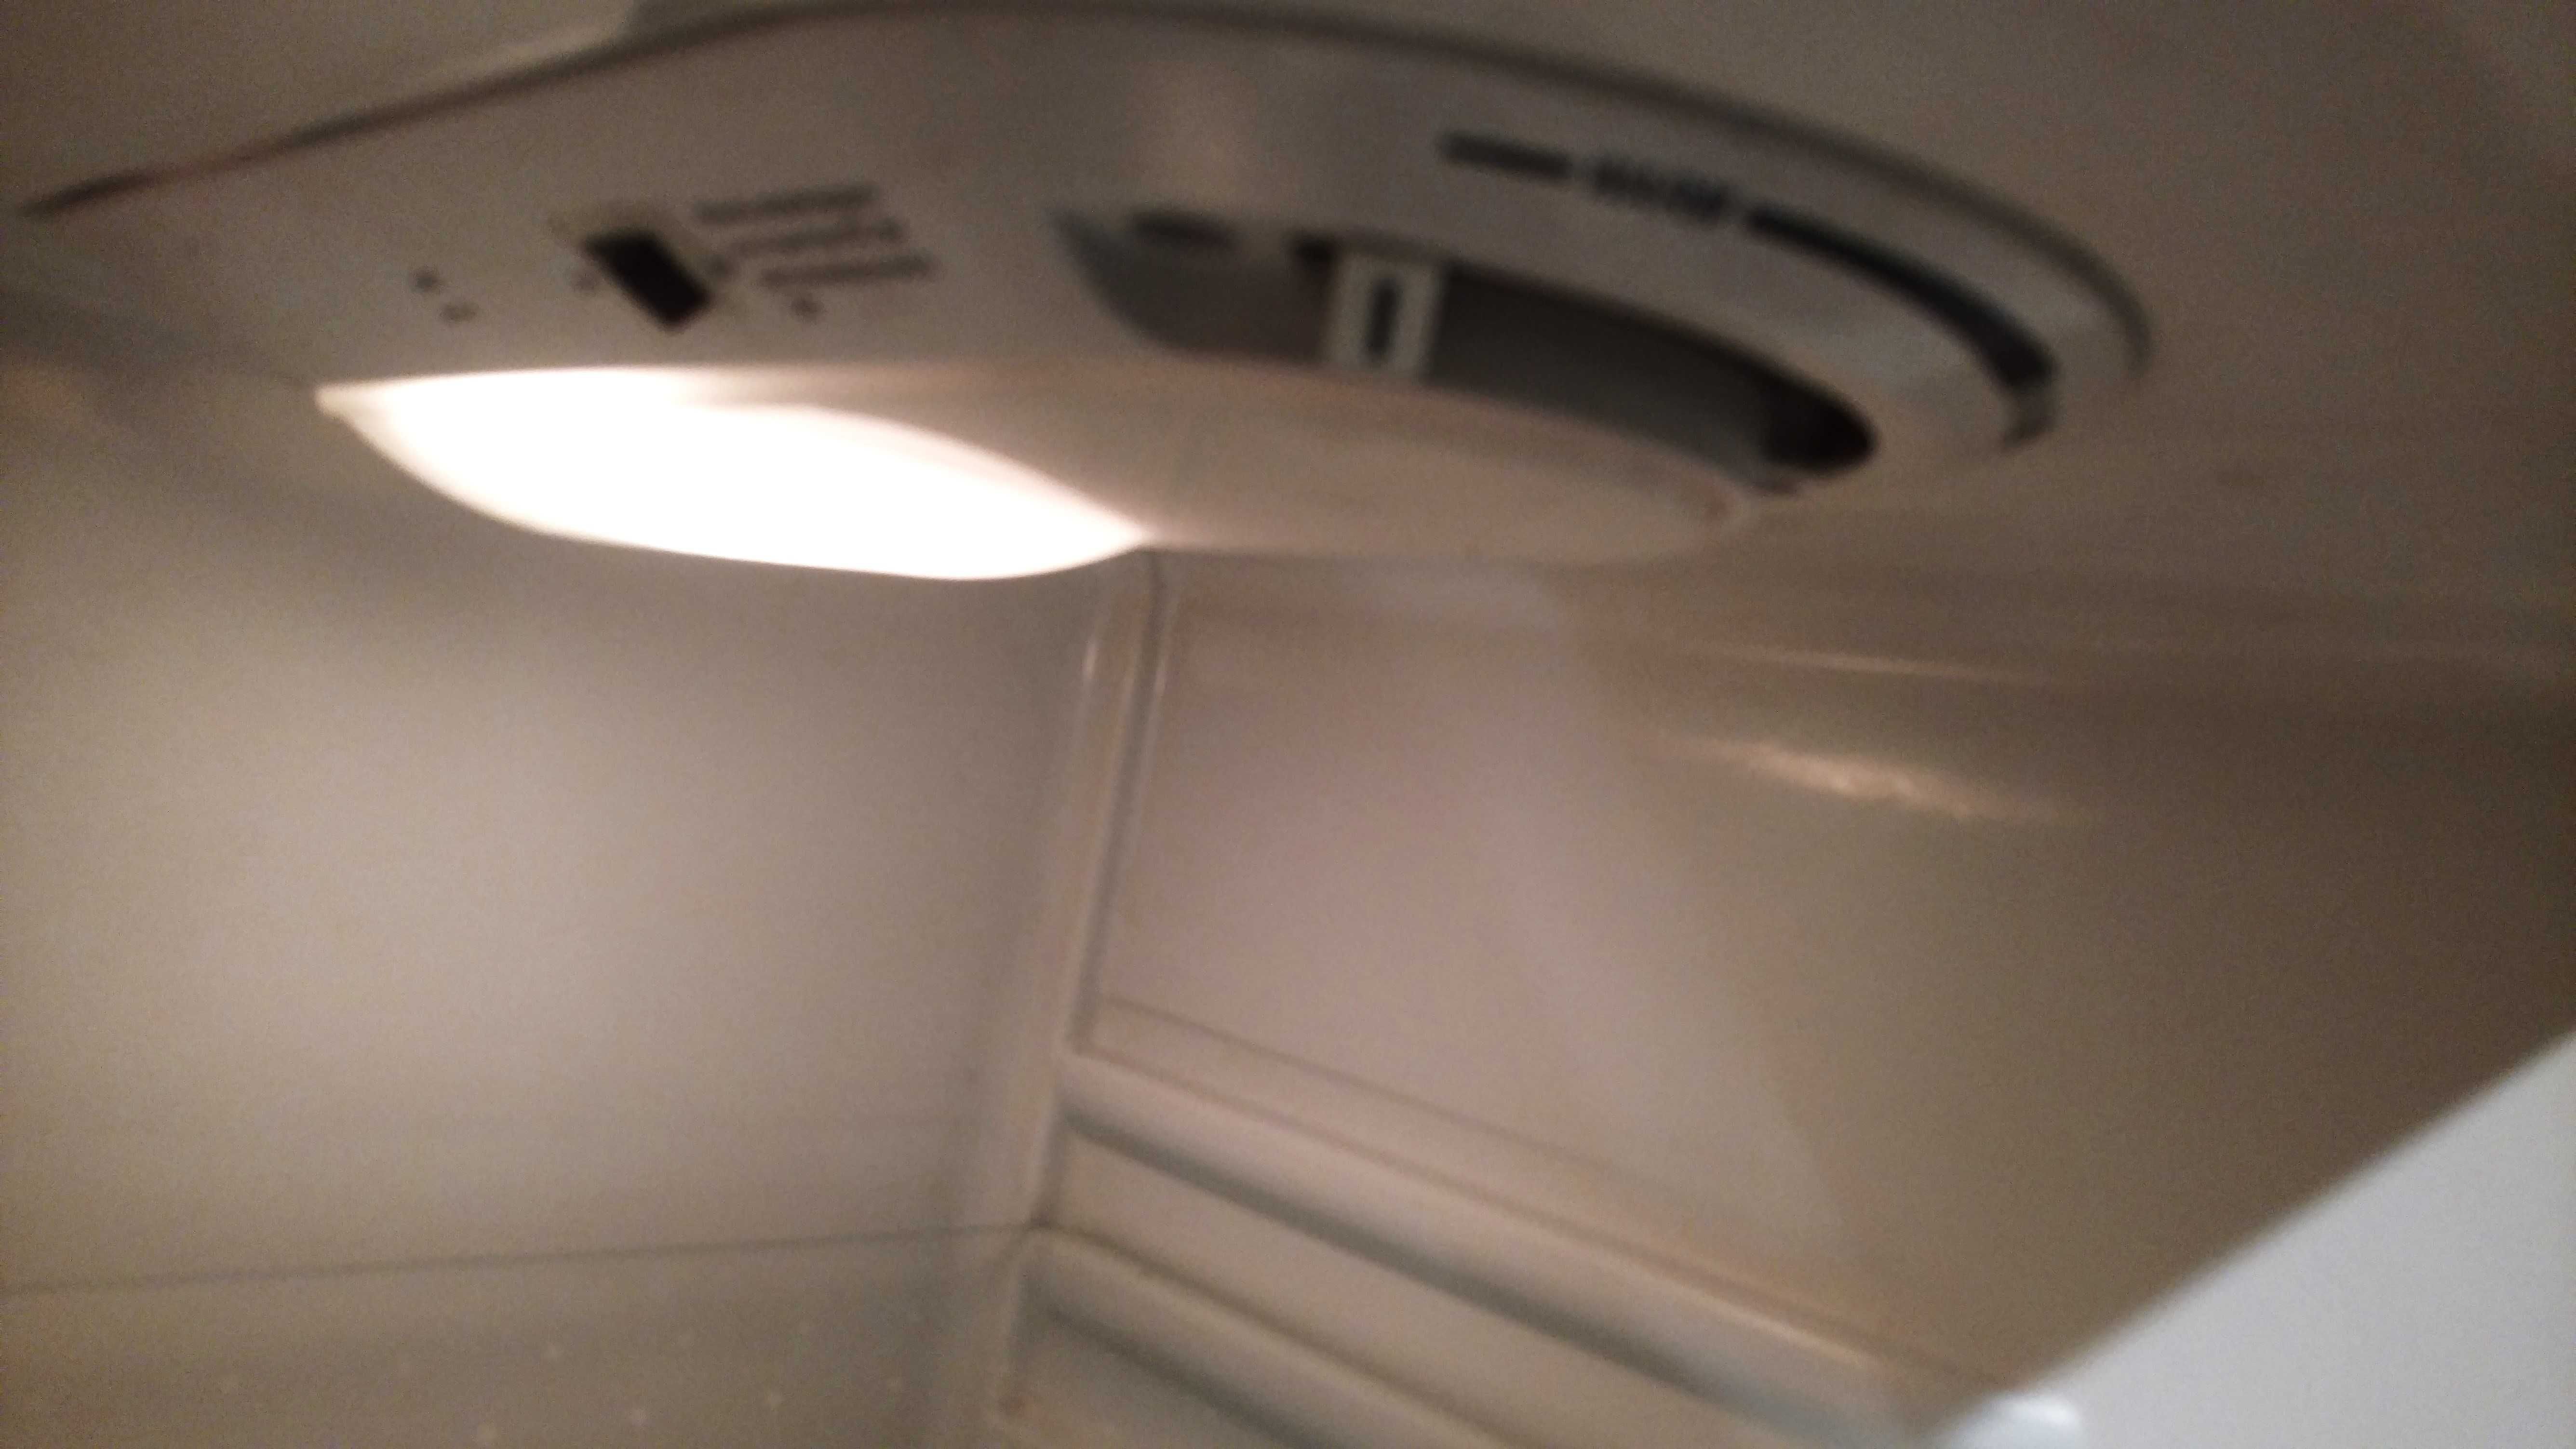 Холодильник Samsung RL17MBSW/MS серебристо-серый, 50 кг, 155 л.